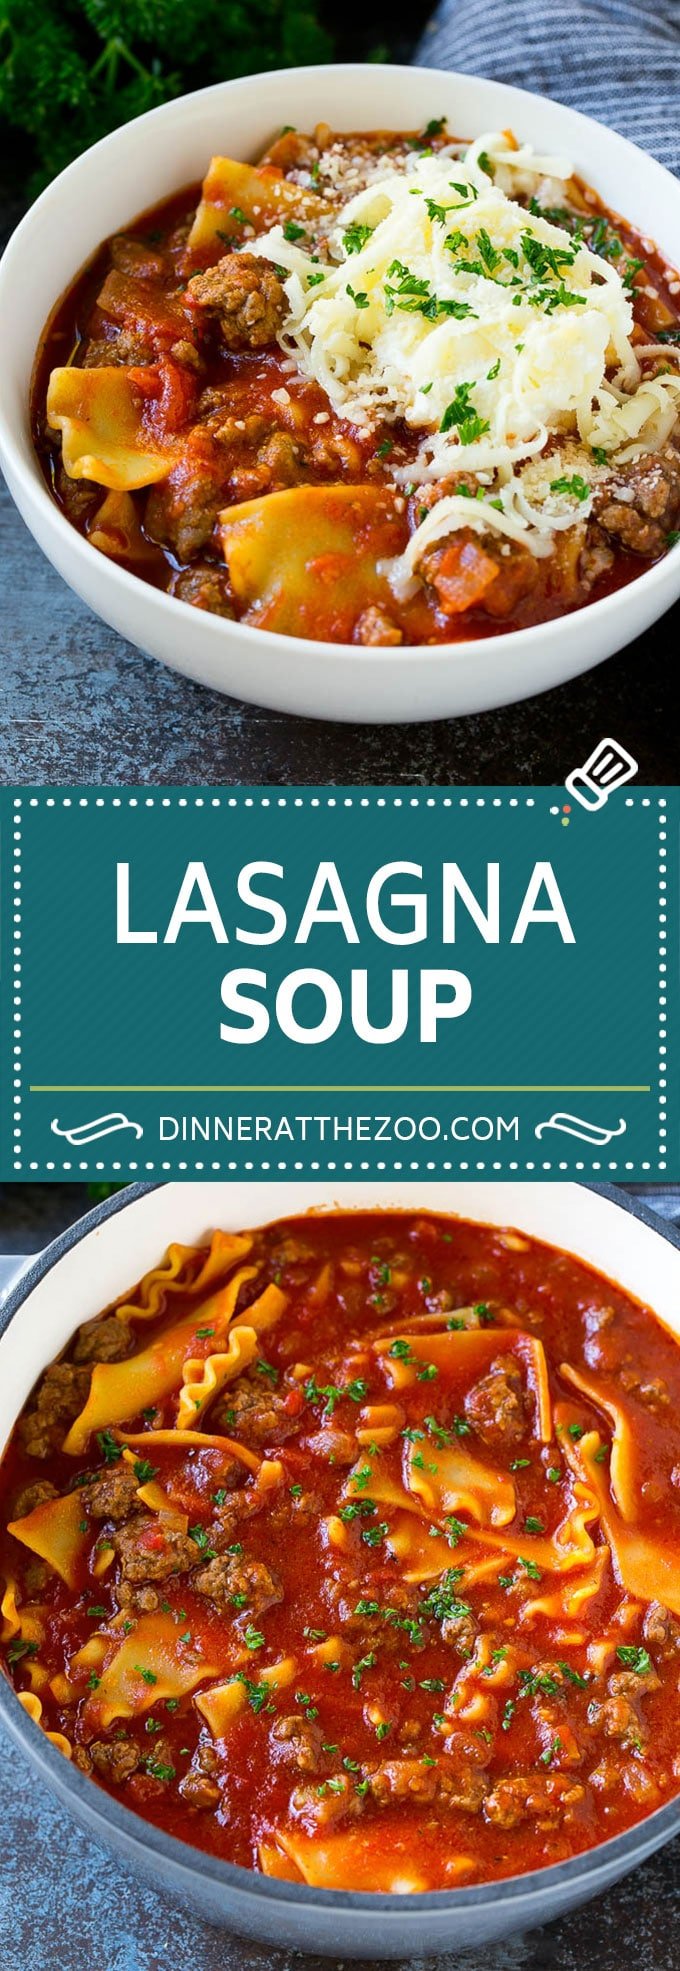 Lasagna Soup Recipe | Italian Soup | Ground Beef Soup #lasagna #pasta #soup #beef #dinner #dinneratthezoo #italian